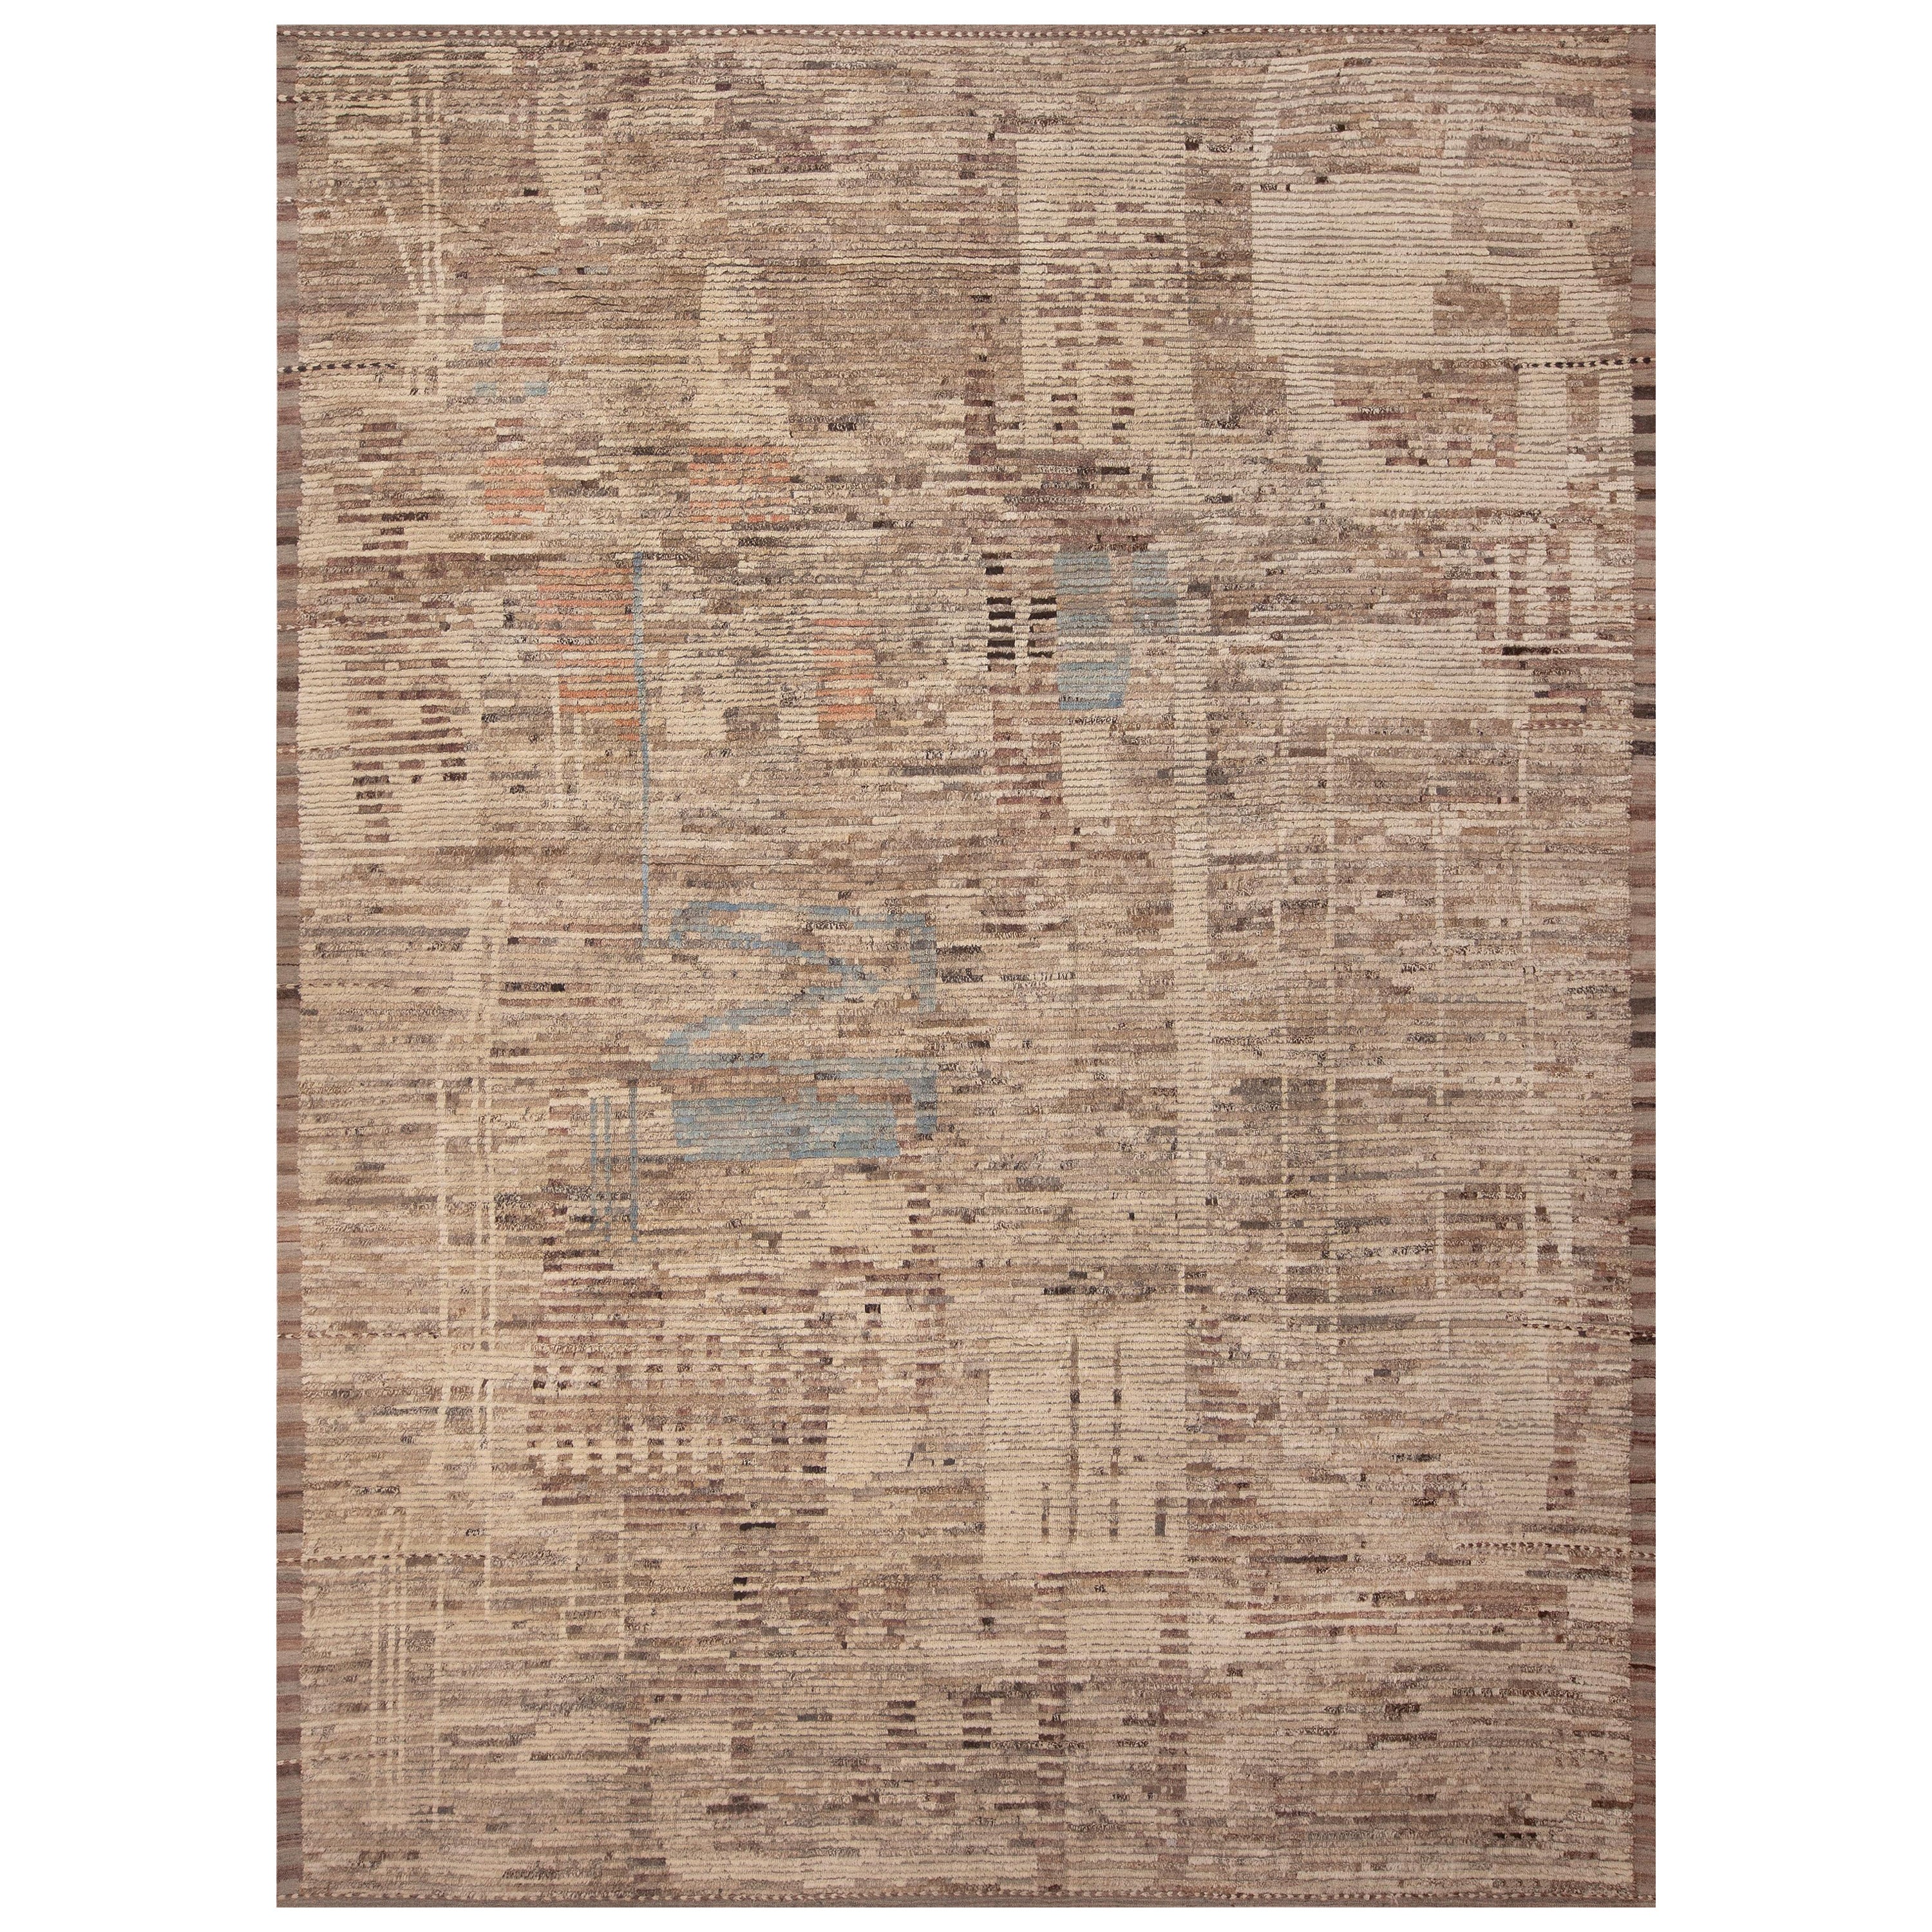 Collection Nazmiyal, tapis moderne abstrait et nomade, 10'6" x 14'2"